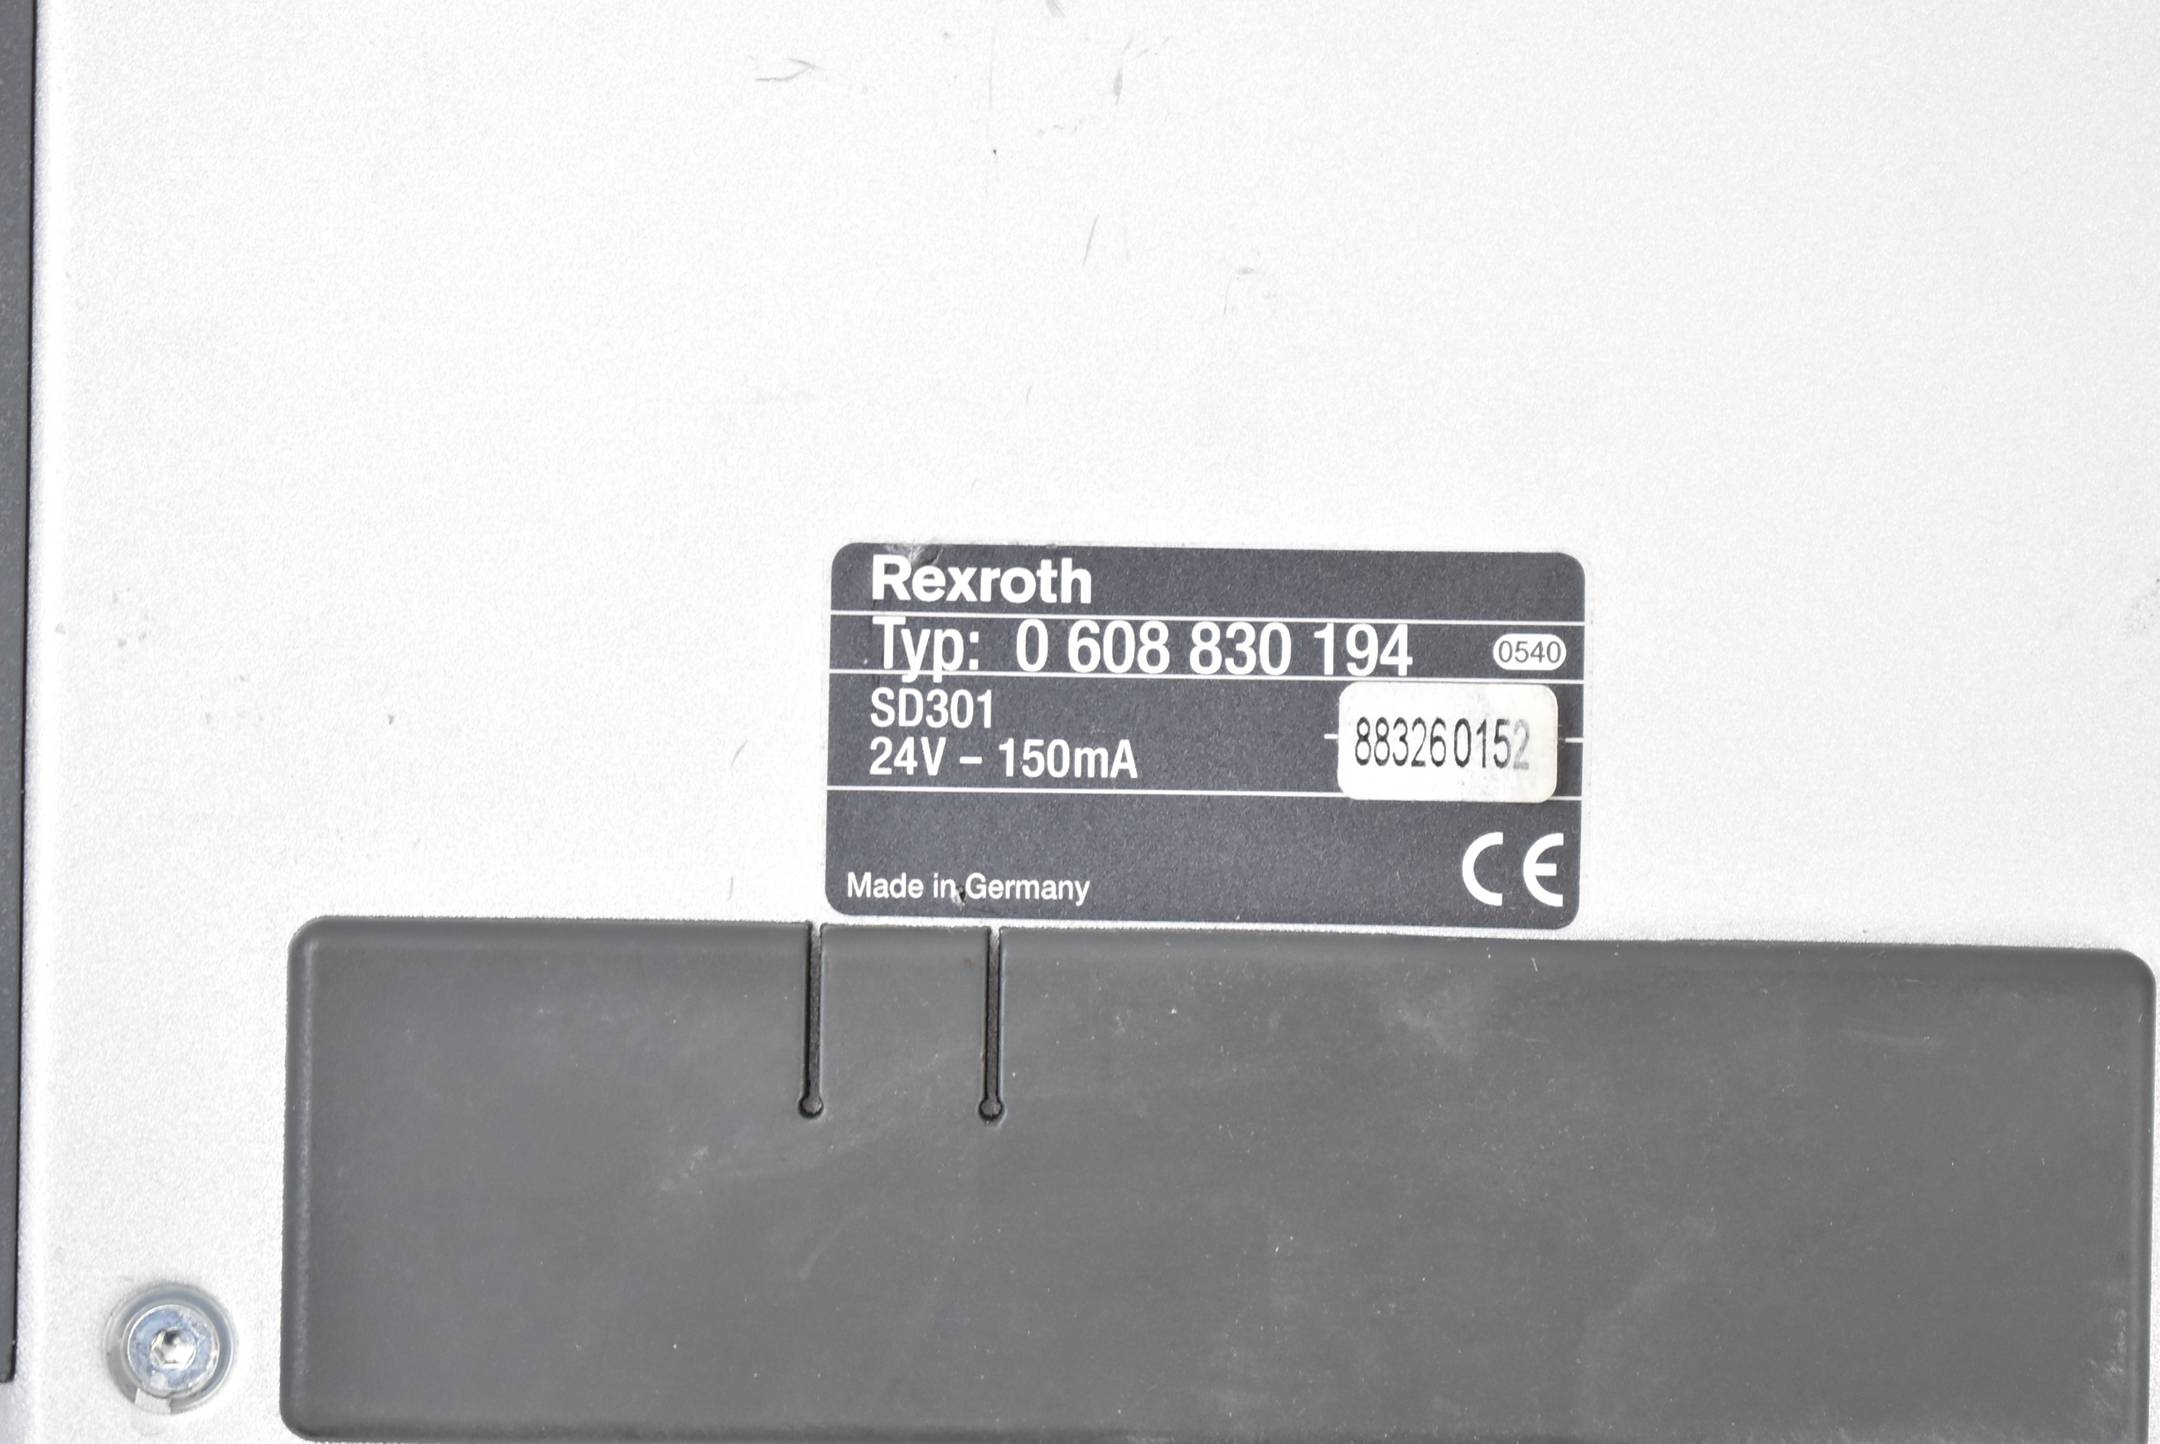 Rexroth Operator Panel SD301 24V-150mA 0608830194 